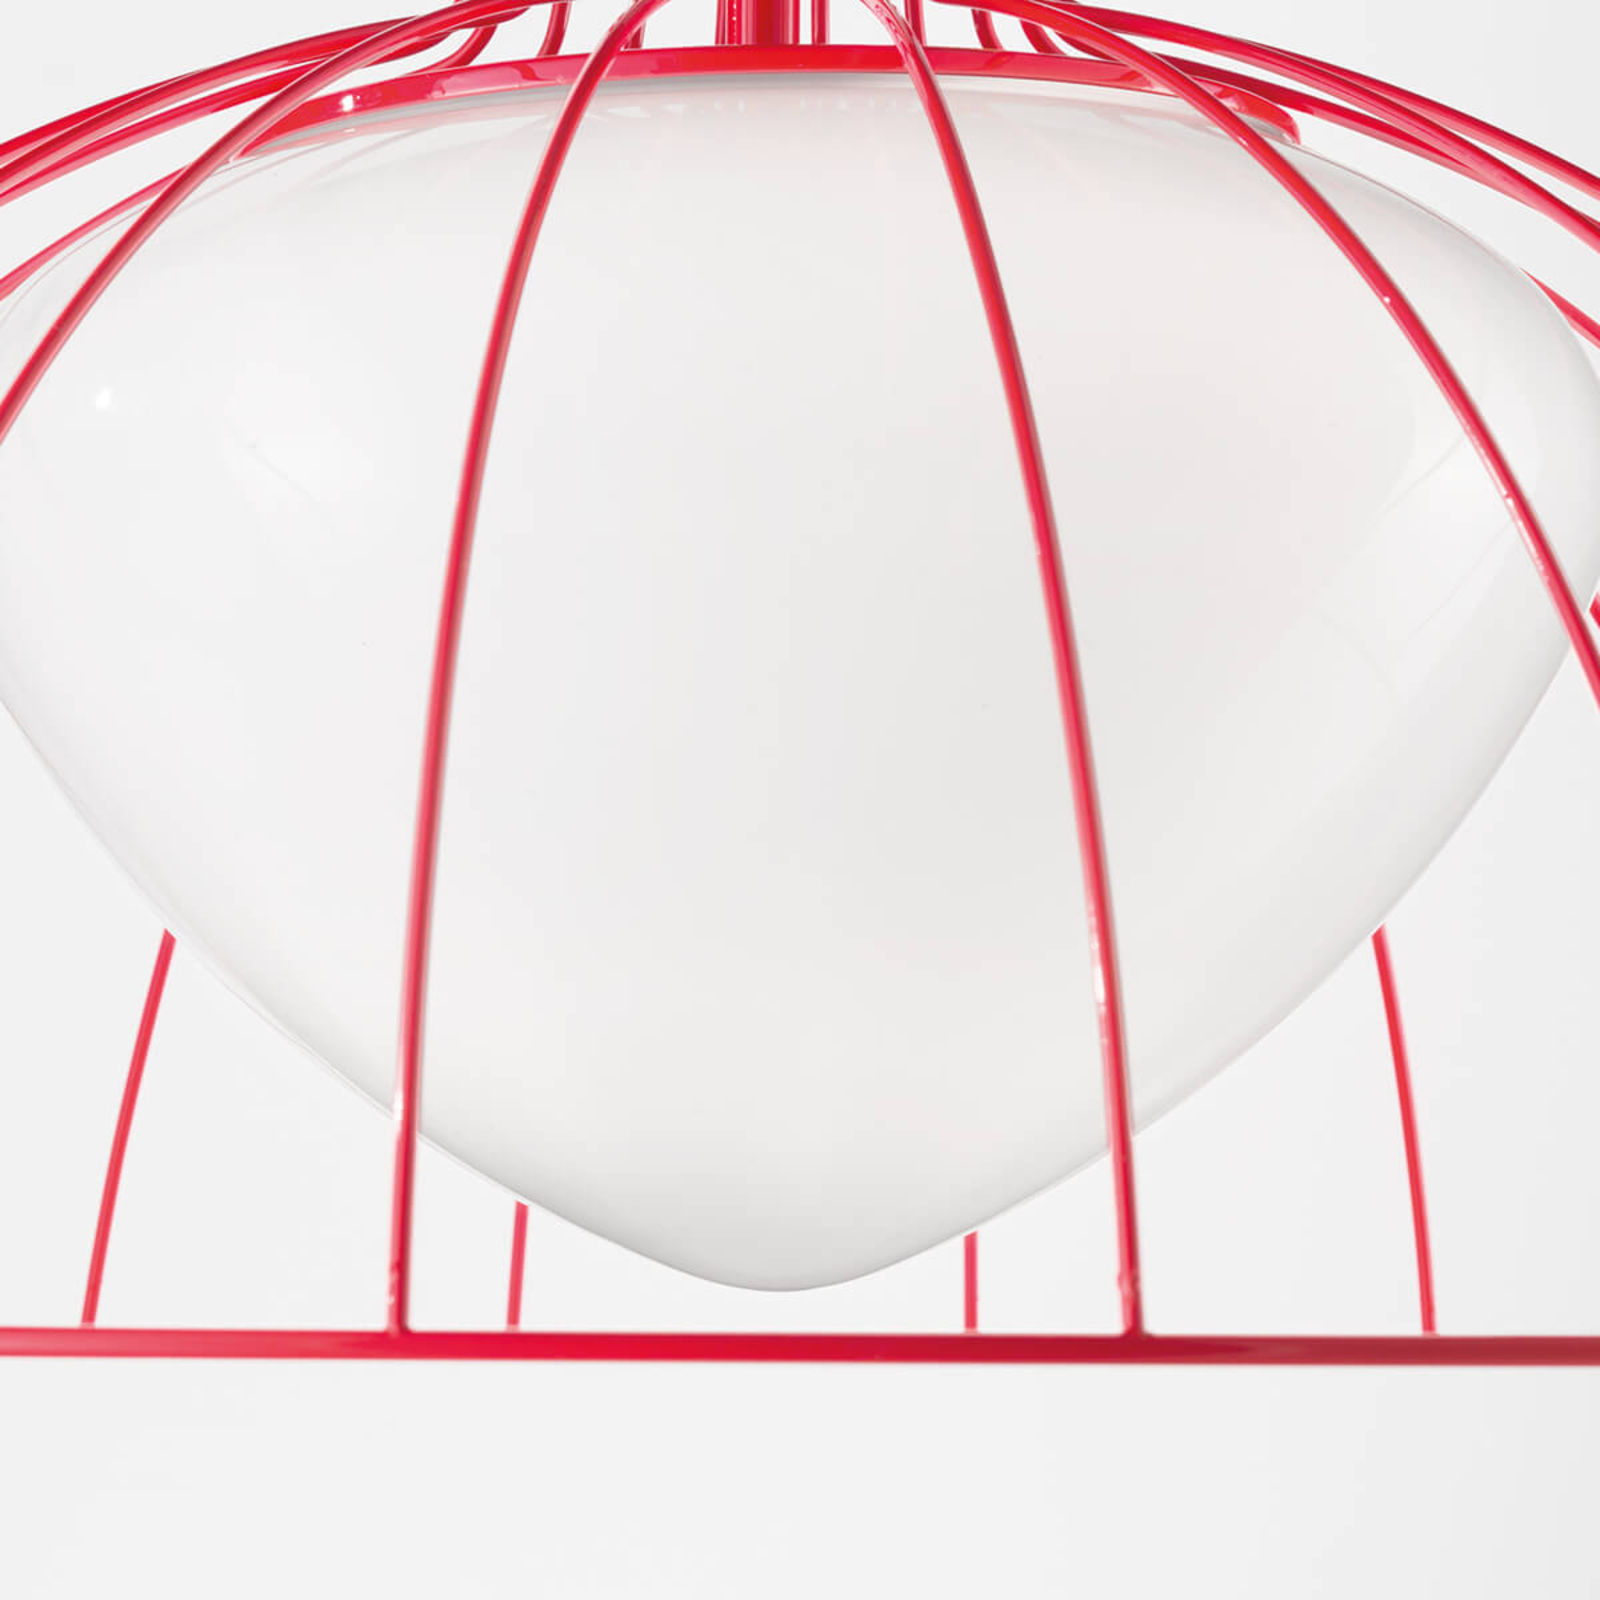 Red Lab designer pendant lamp - made in Italy